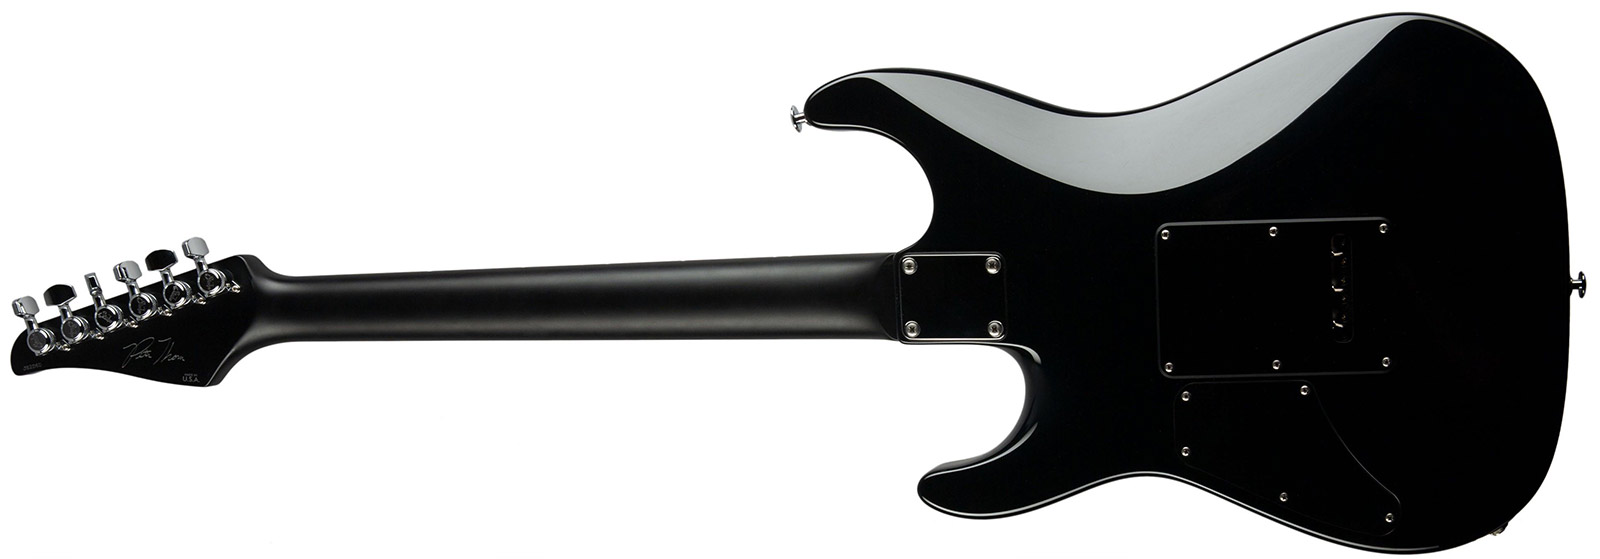 Suhr Pete Thorn Standard 01-sig-0029 Signature 2h Trem Rw - Garnet Red - Guitarra eléctrica con forma de str. - Variation 1